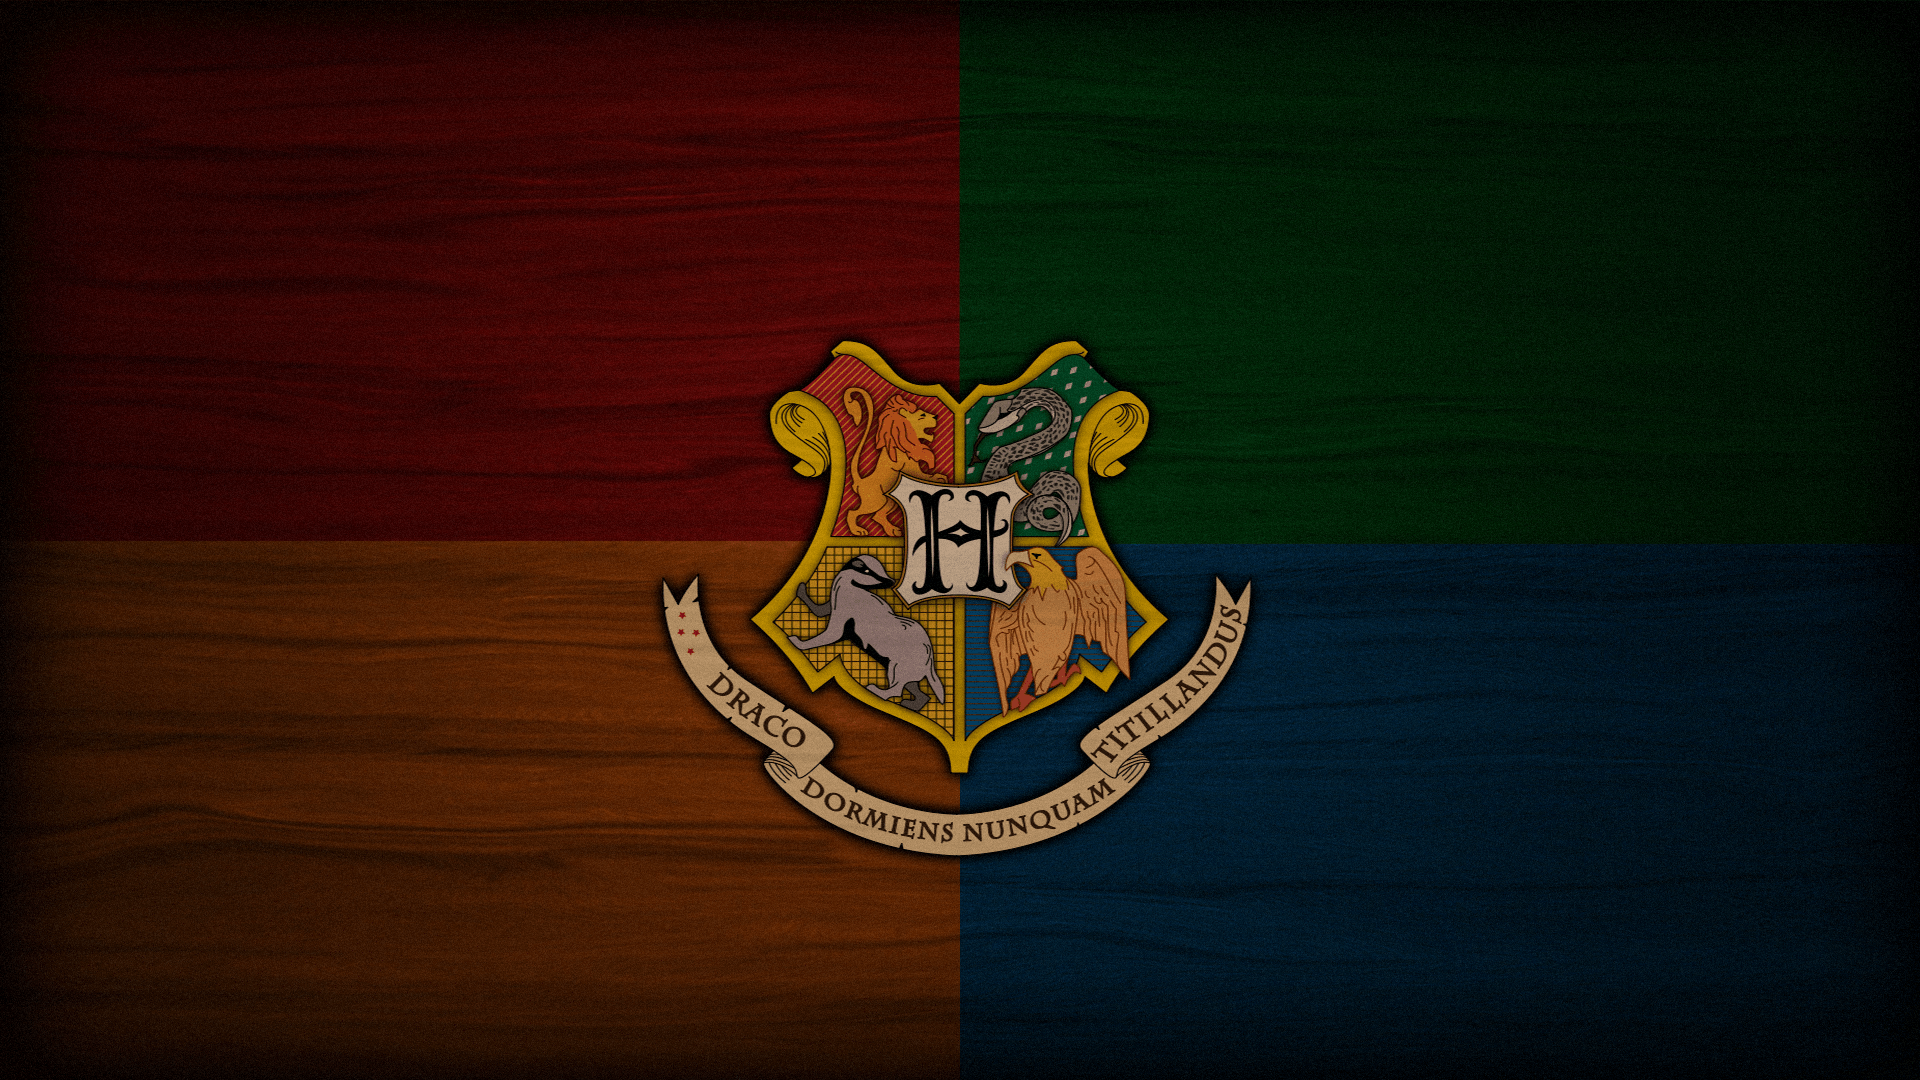 A Hogwarts wallpaper I put together (1920x1080)